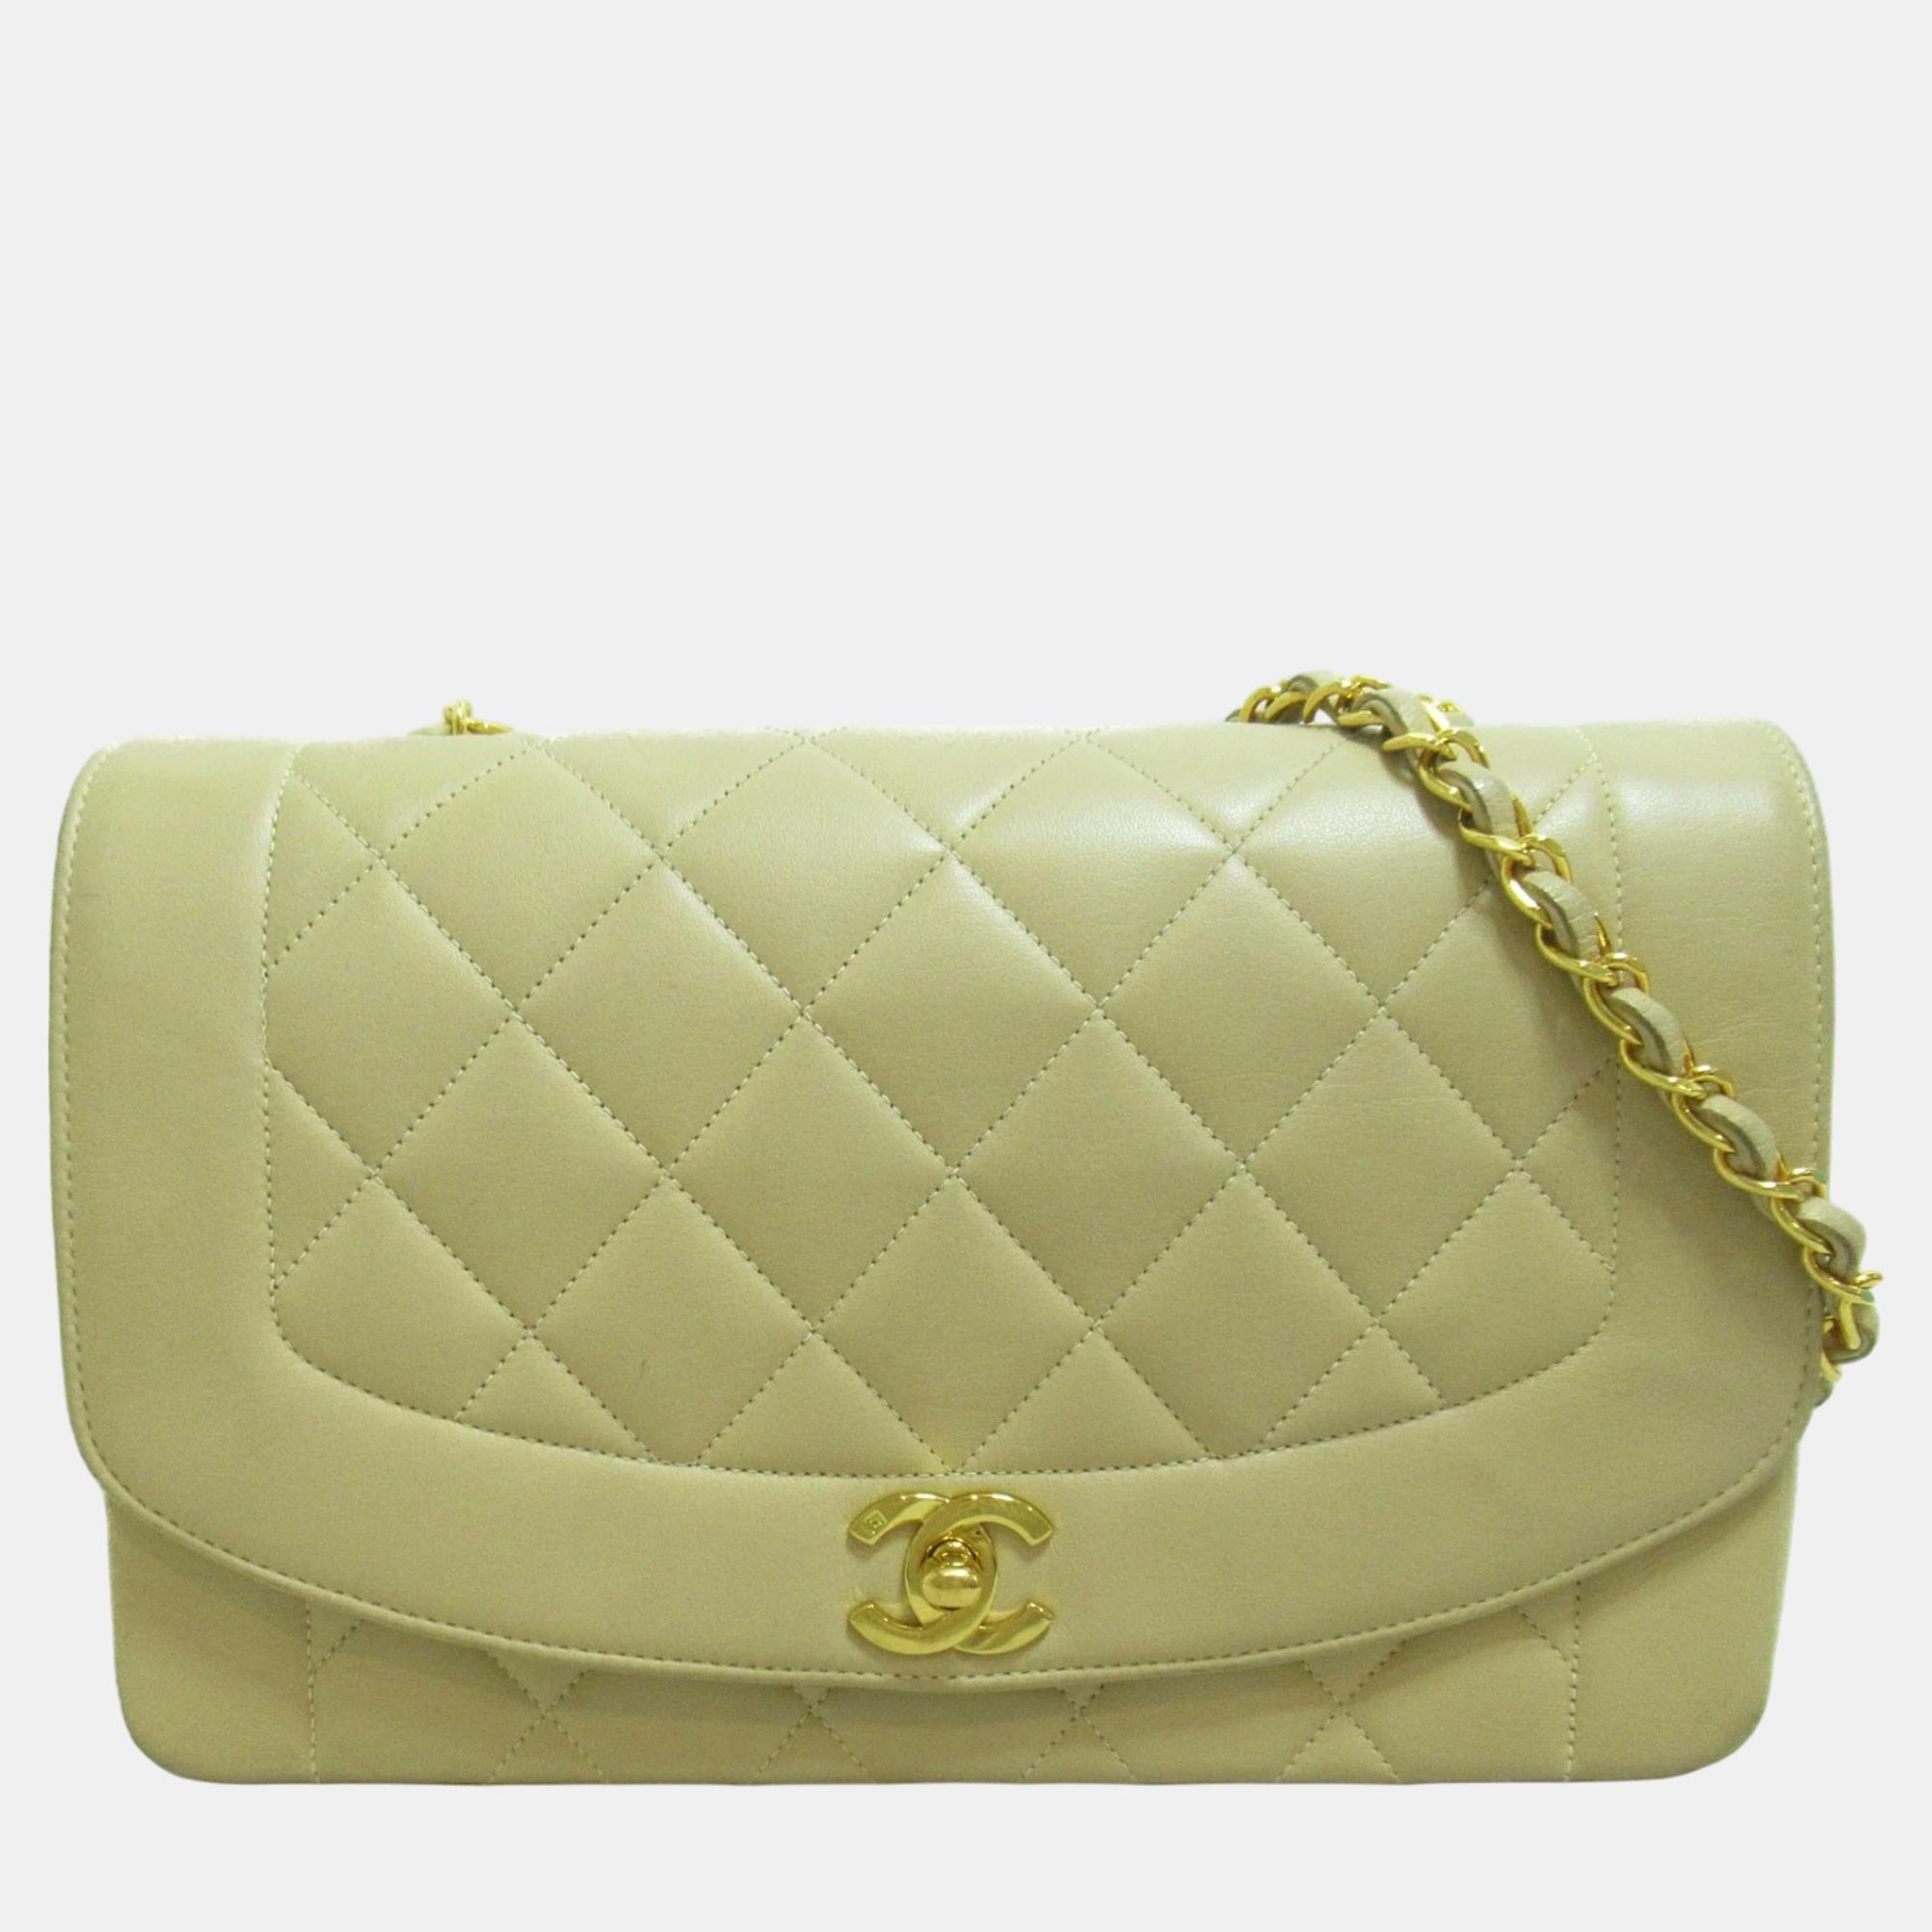 Chanel beige leather medium vintage diana flap bag